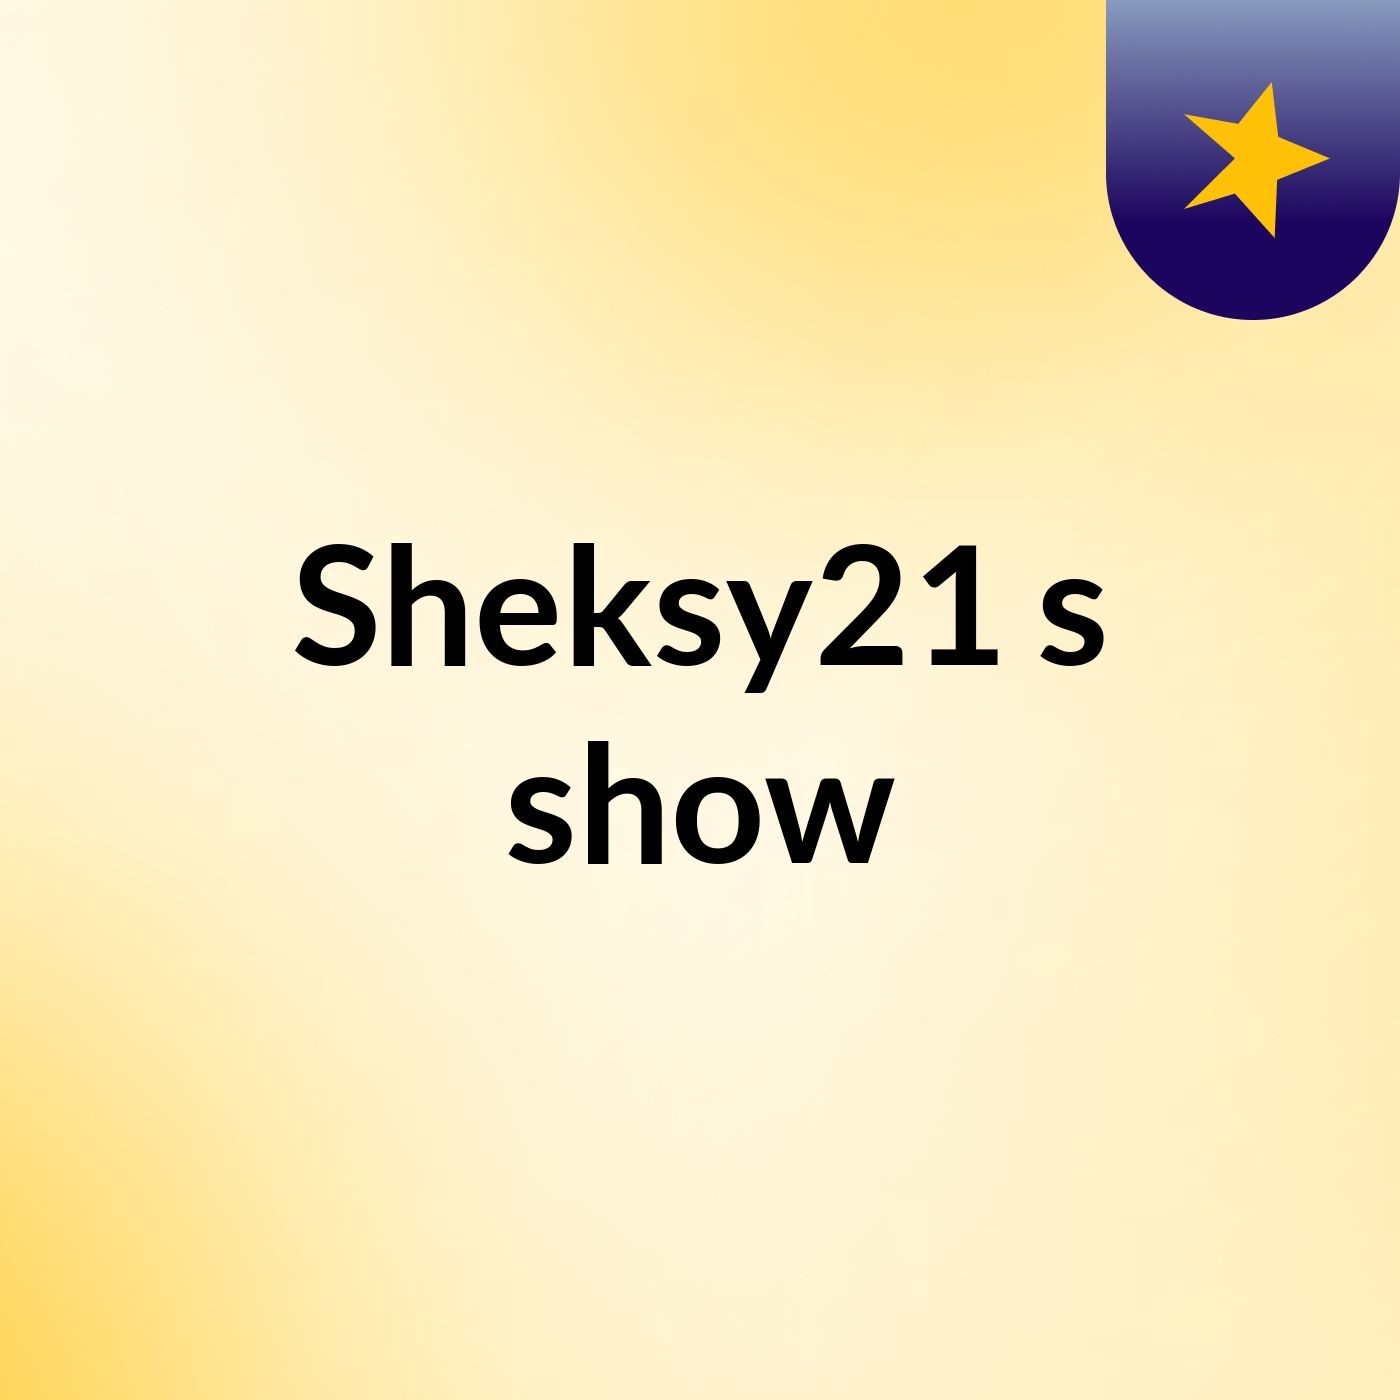 Sheksy21's show